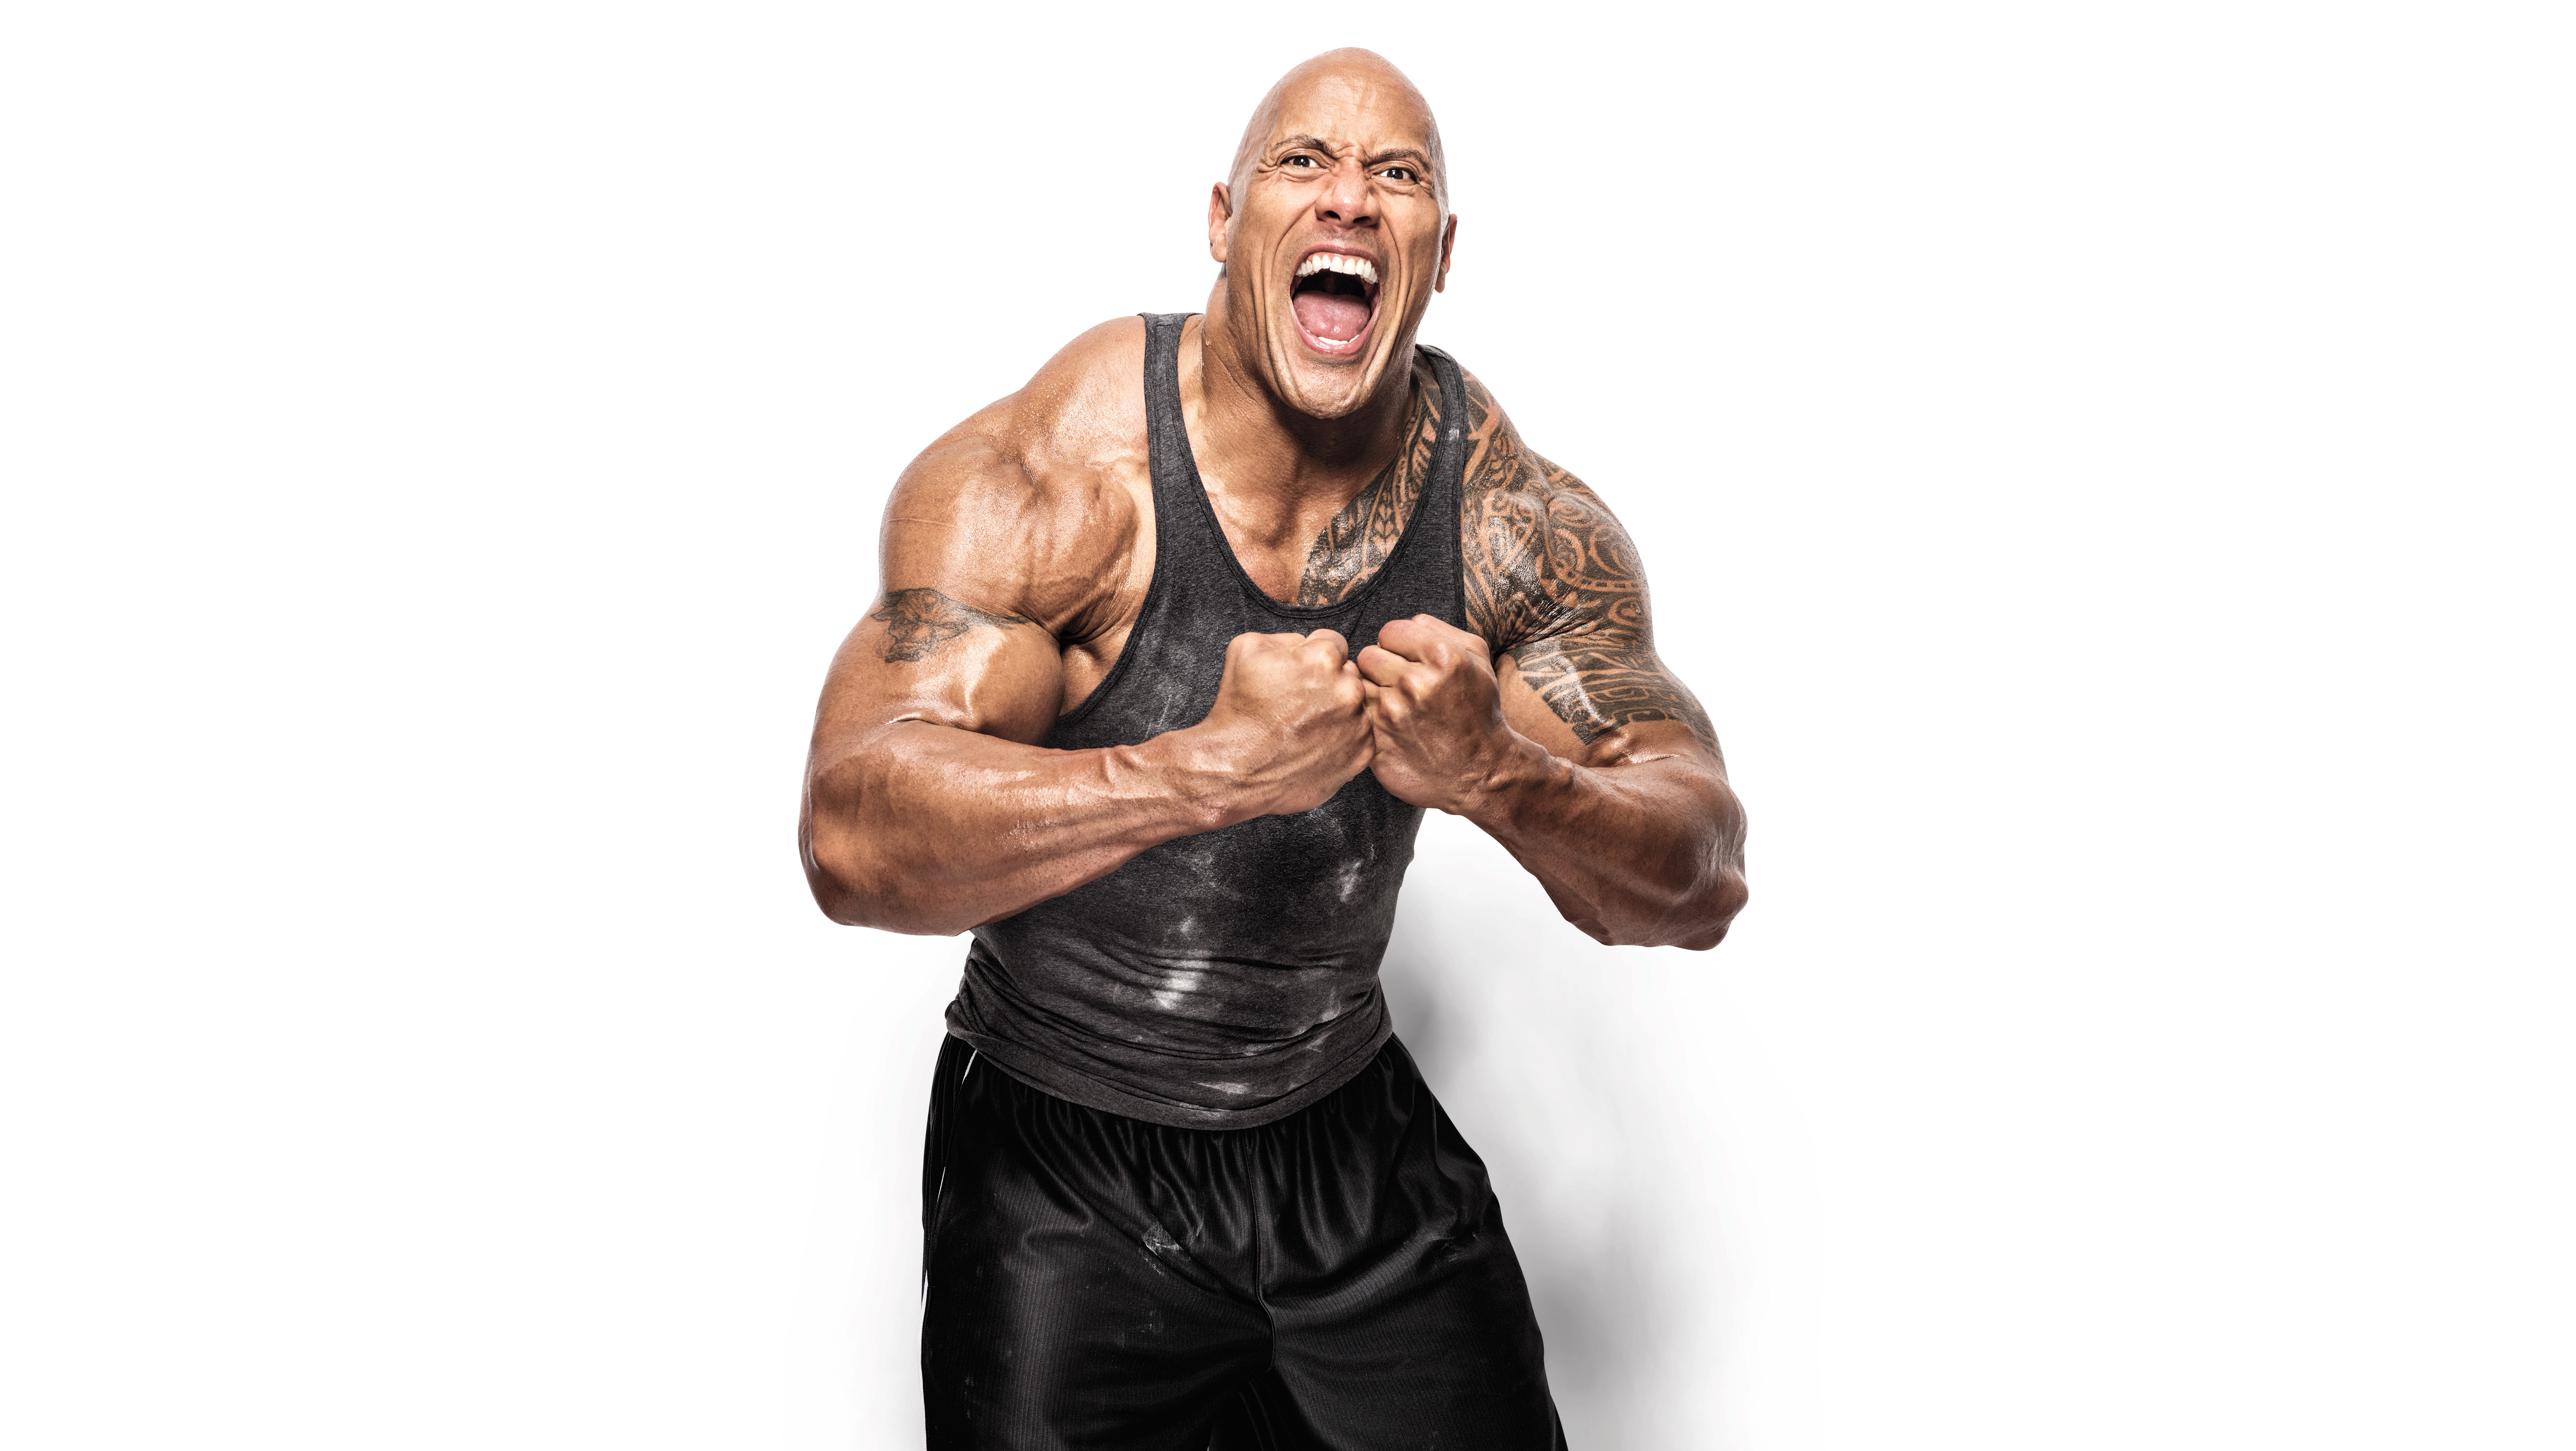 dwayne johnson wallpaper,bodybuilder,arm,muscle,bodybuilding,standing